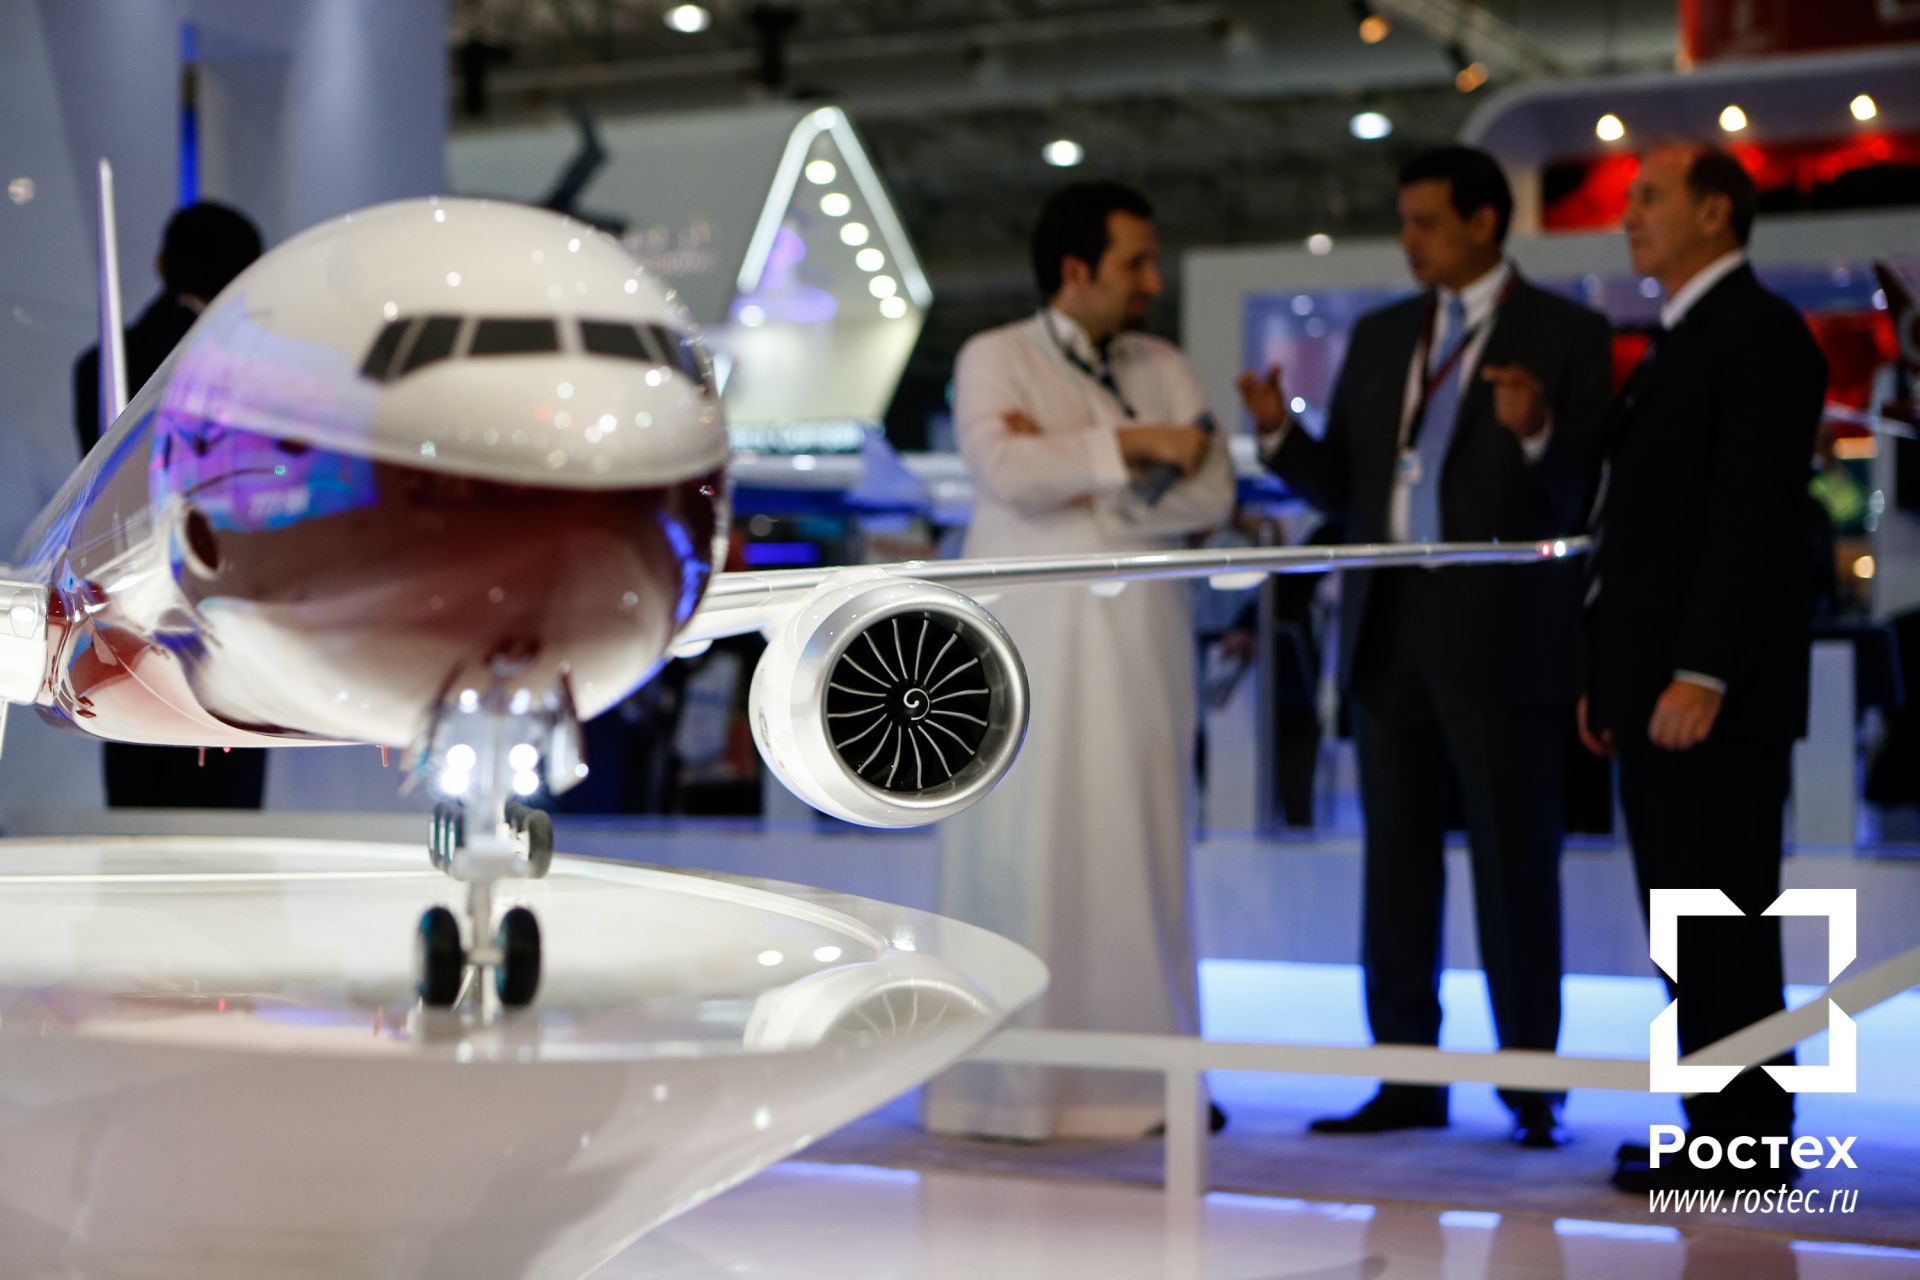 The Dubai Airshow is smashing records